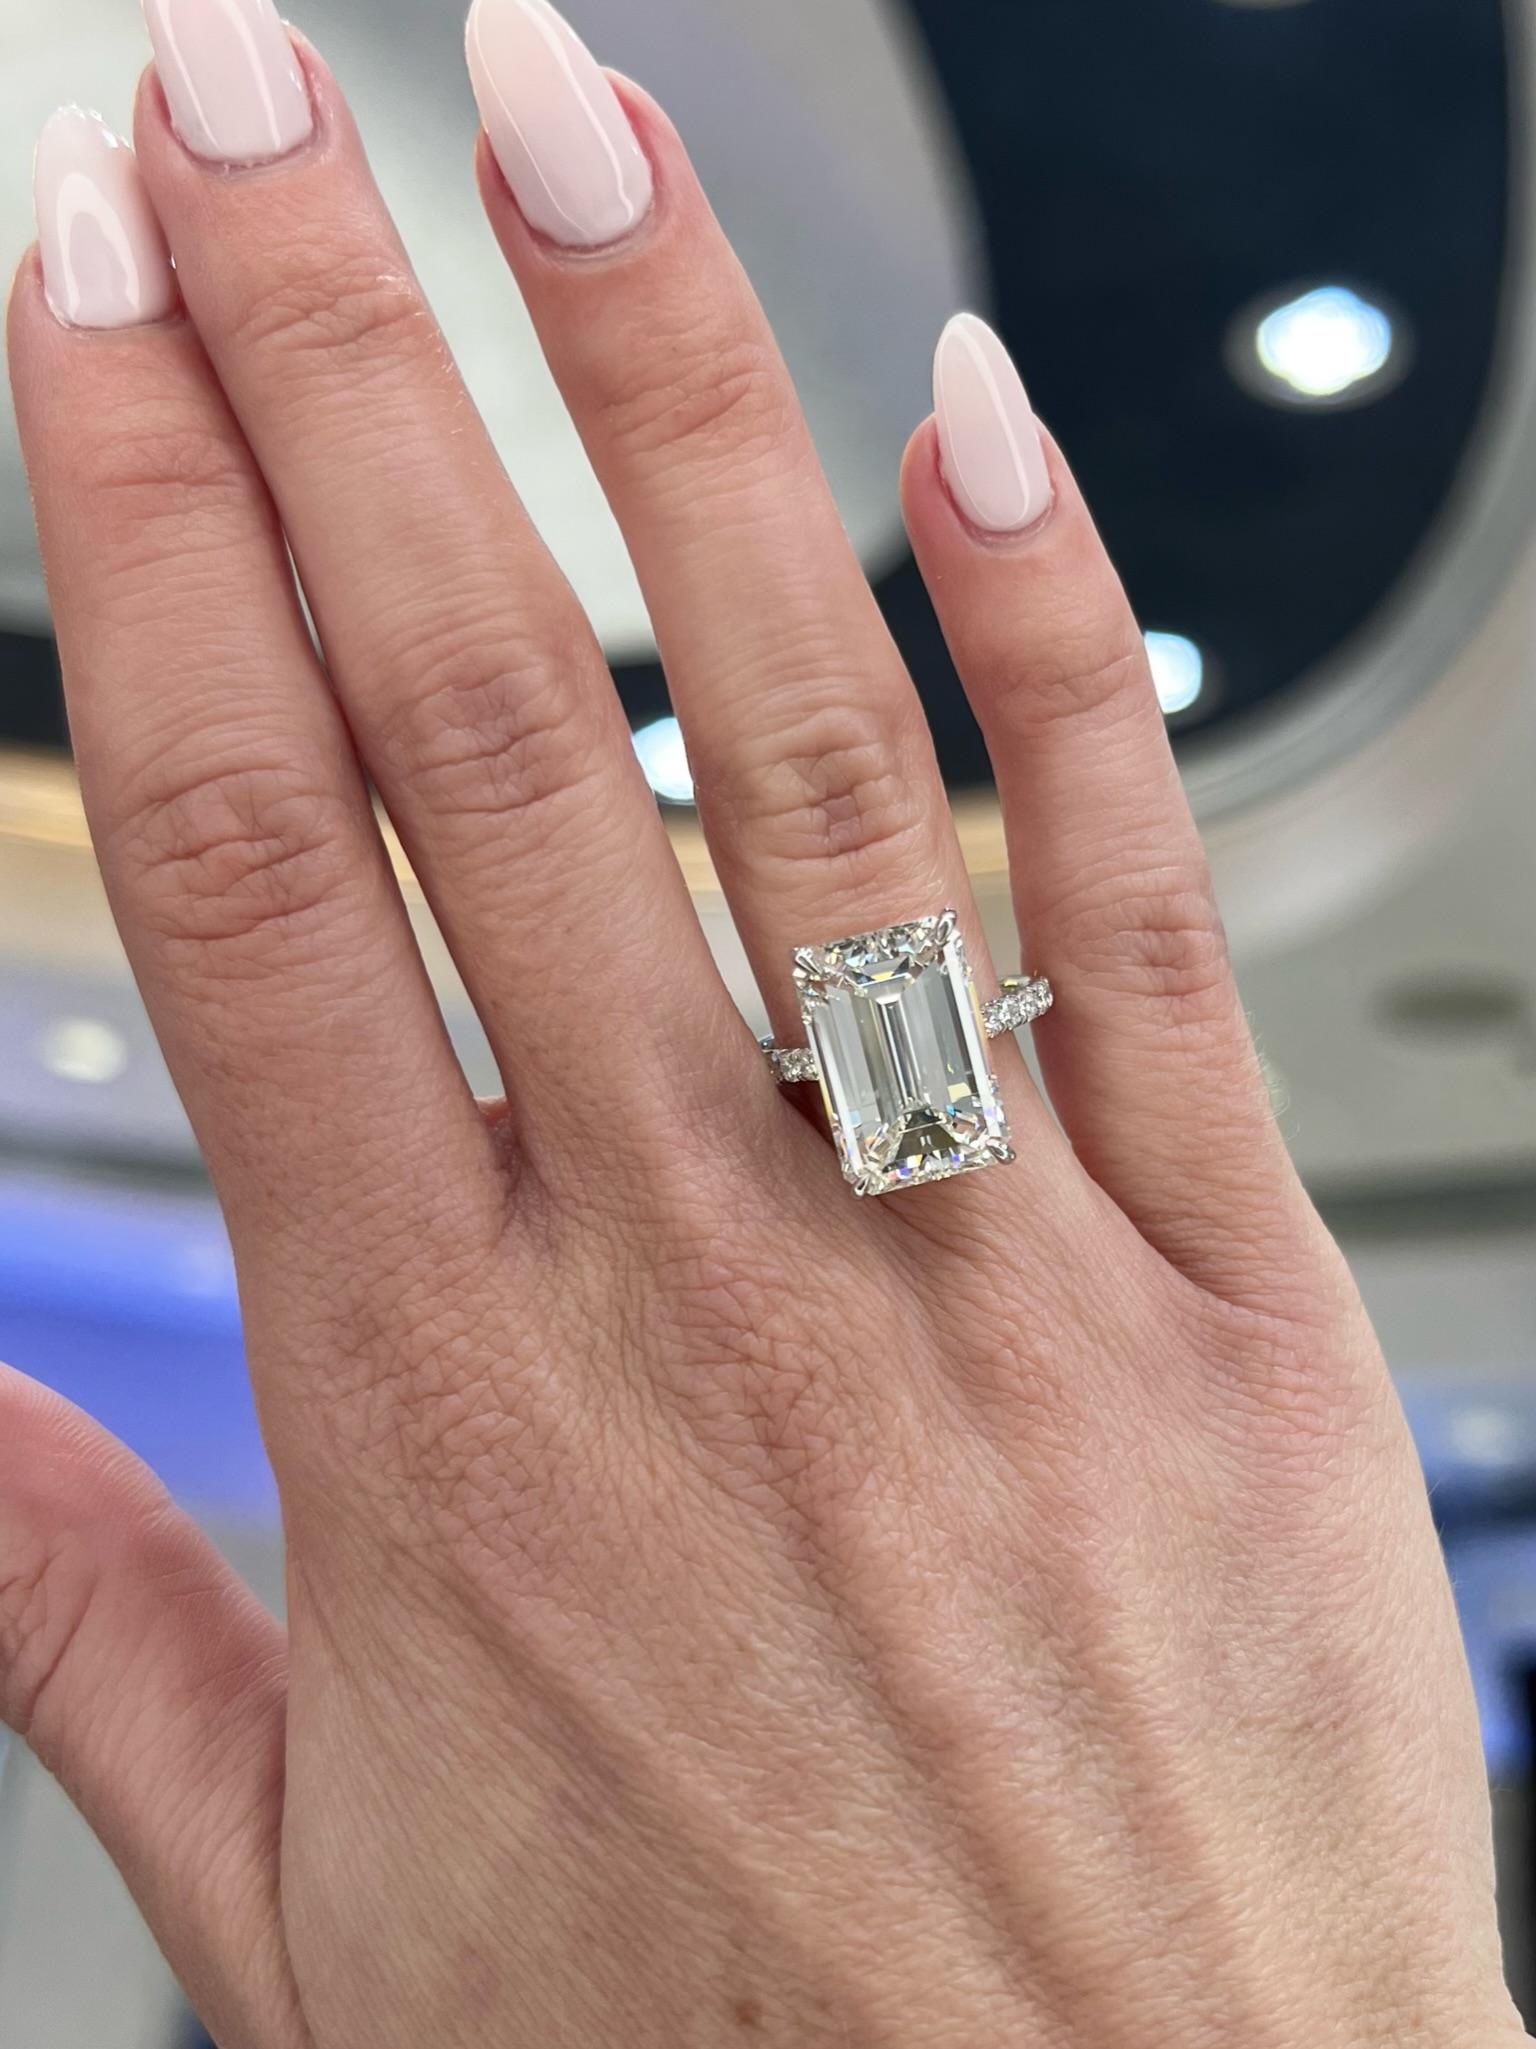 David Rosenberg 10.86 Carat Emerald Cut I VS2 GIA Diamond Engagement Ring For Sale 6